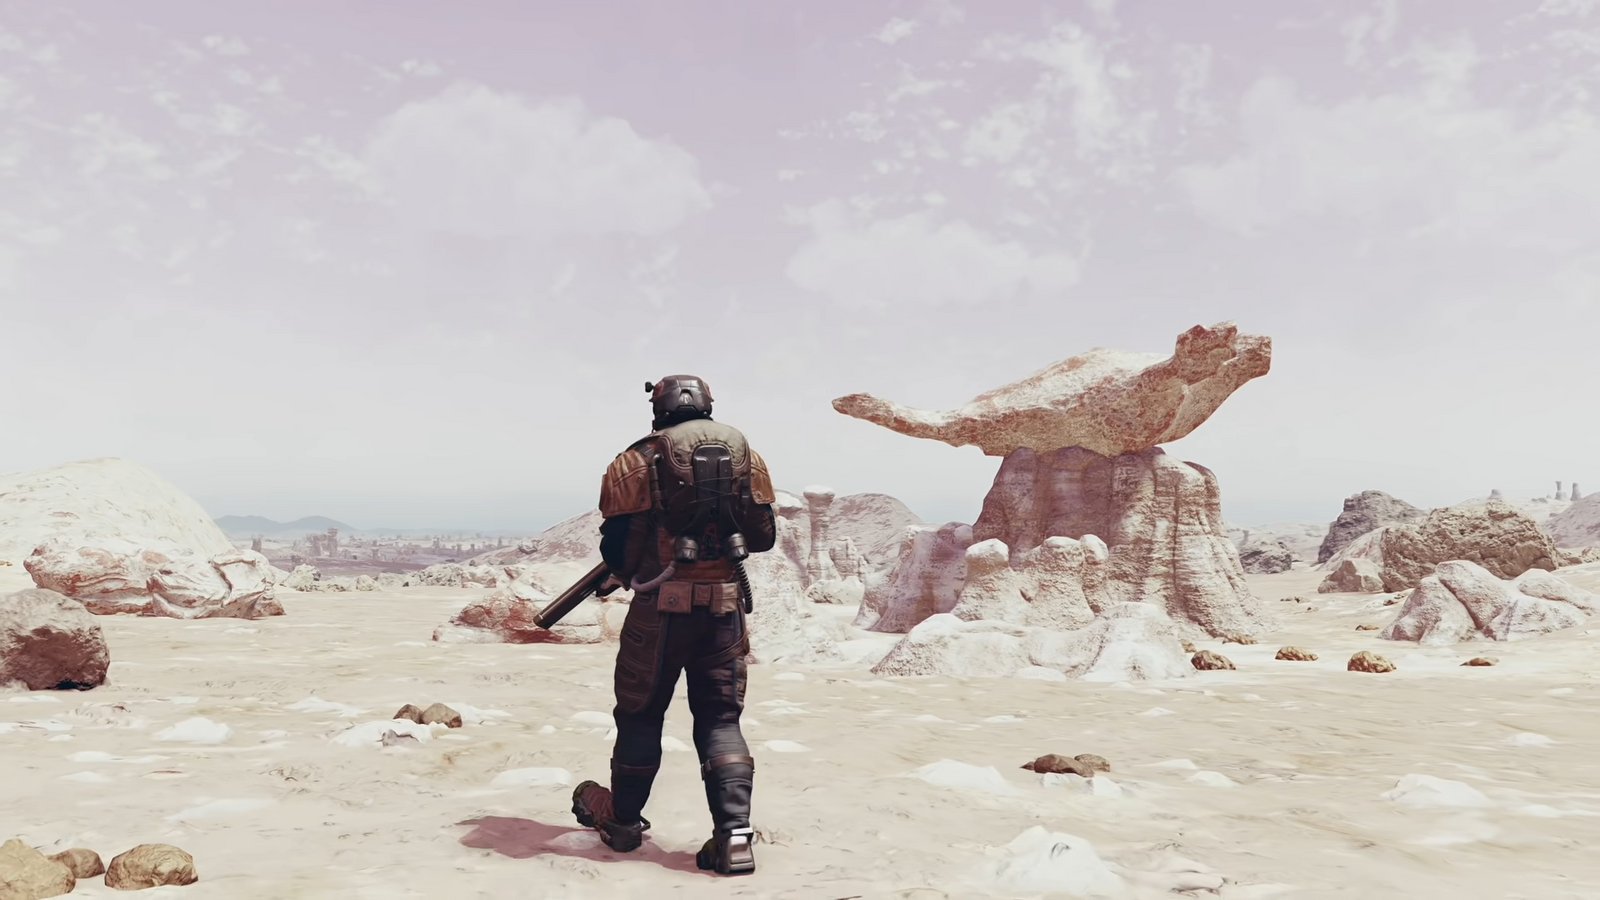 A character walking across a rocky planet in Starfield.